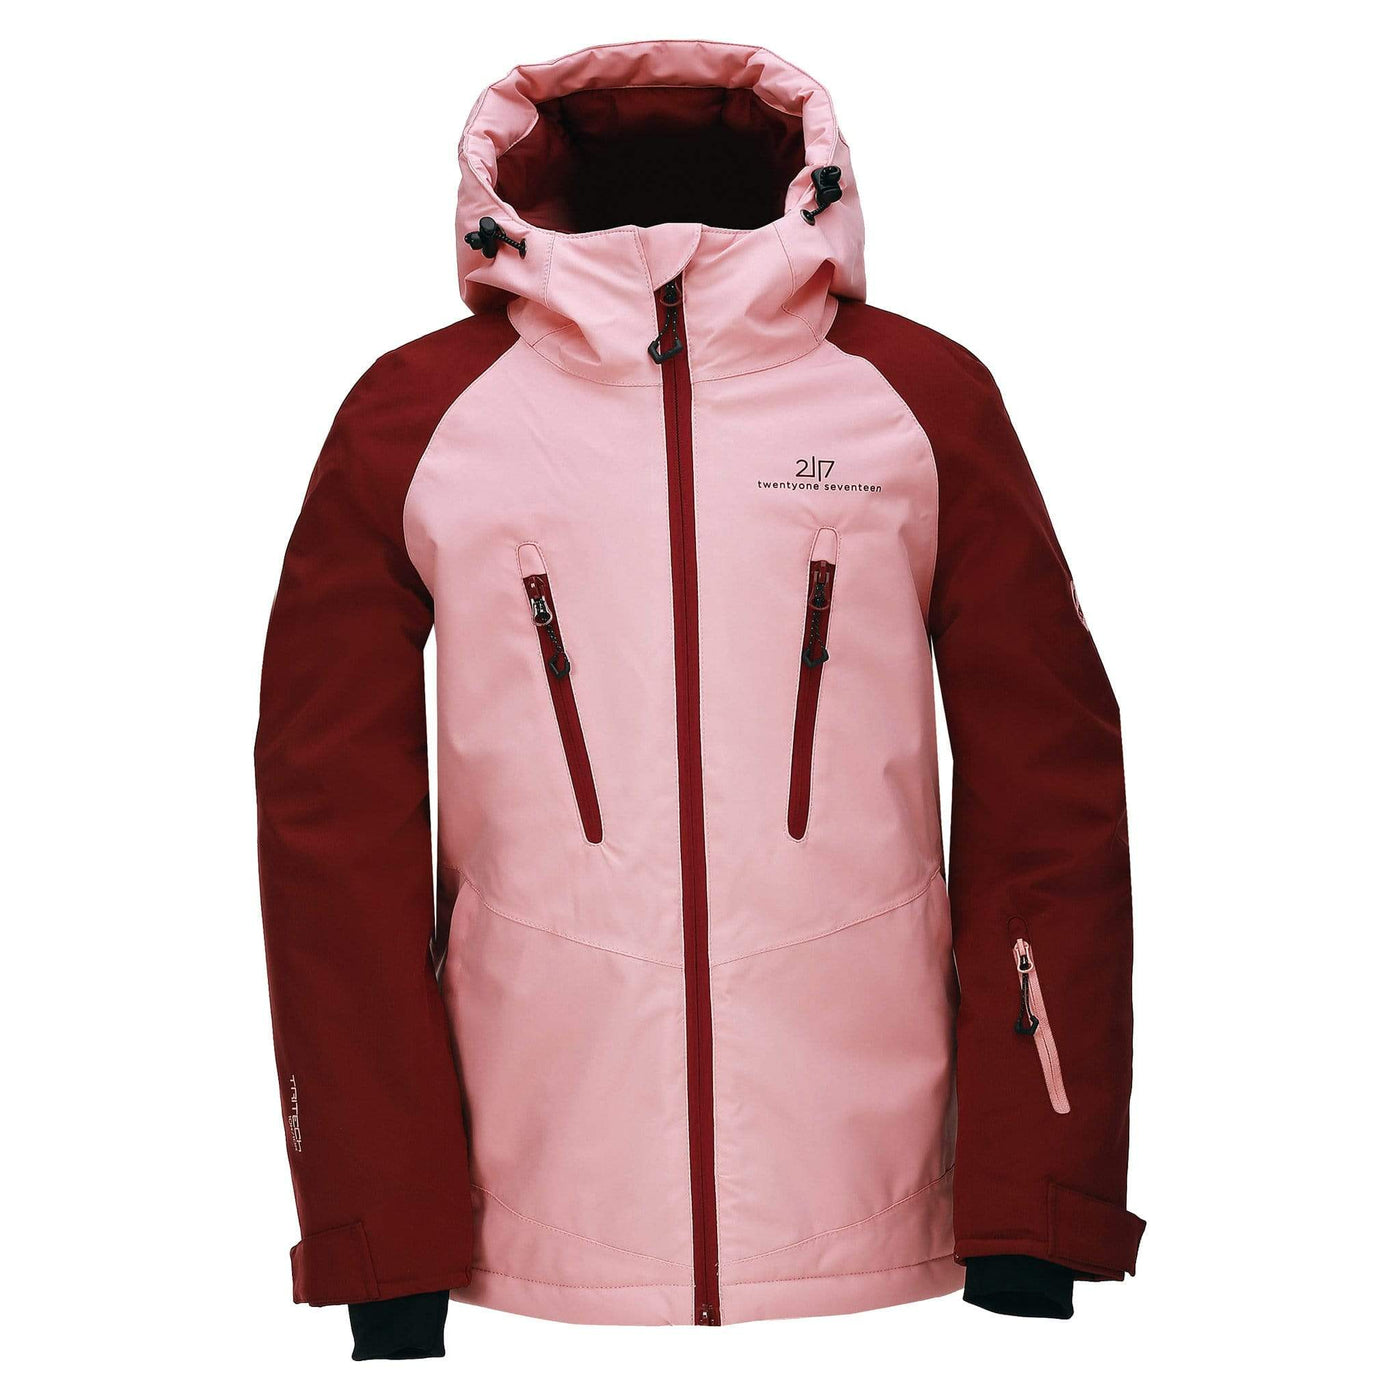 SnowKids Outerwear Jacket 128 2117 Of Sweden Kids Lammhult Padded Ski Jacket - Coral